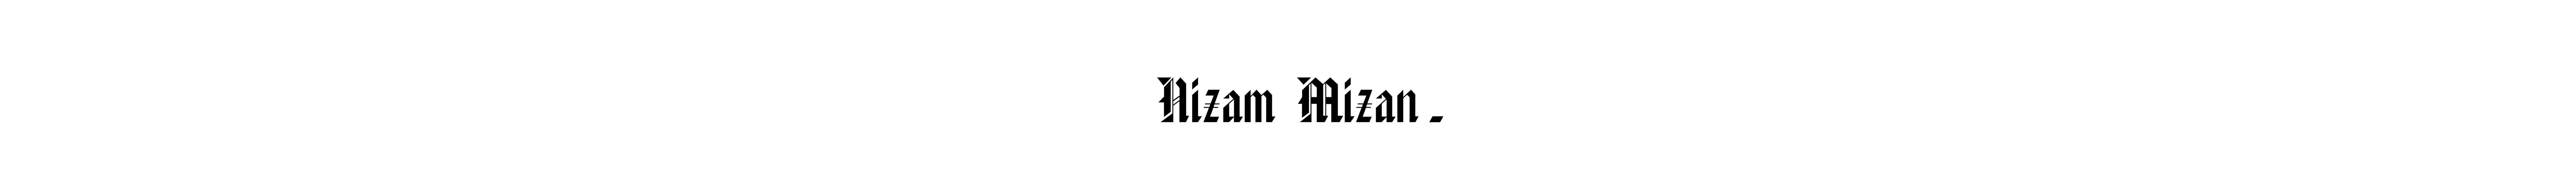 Banner de perfil de Nizam Mizan